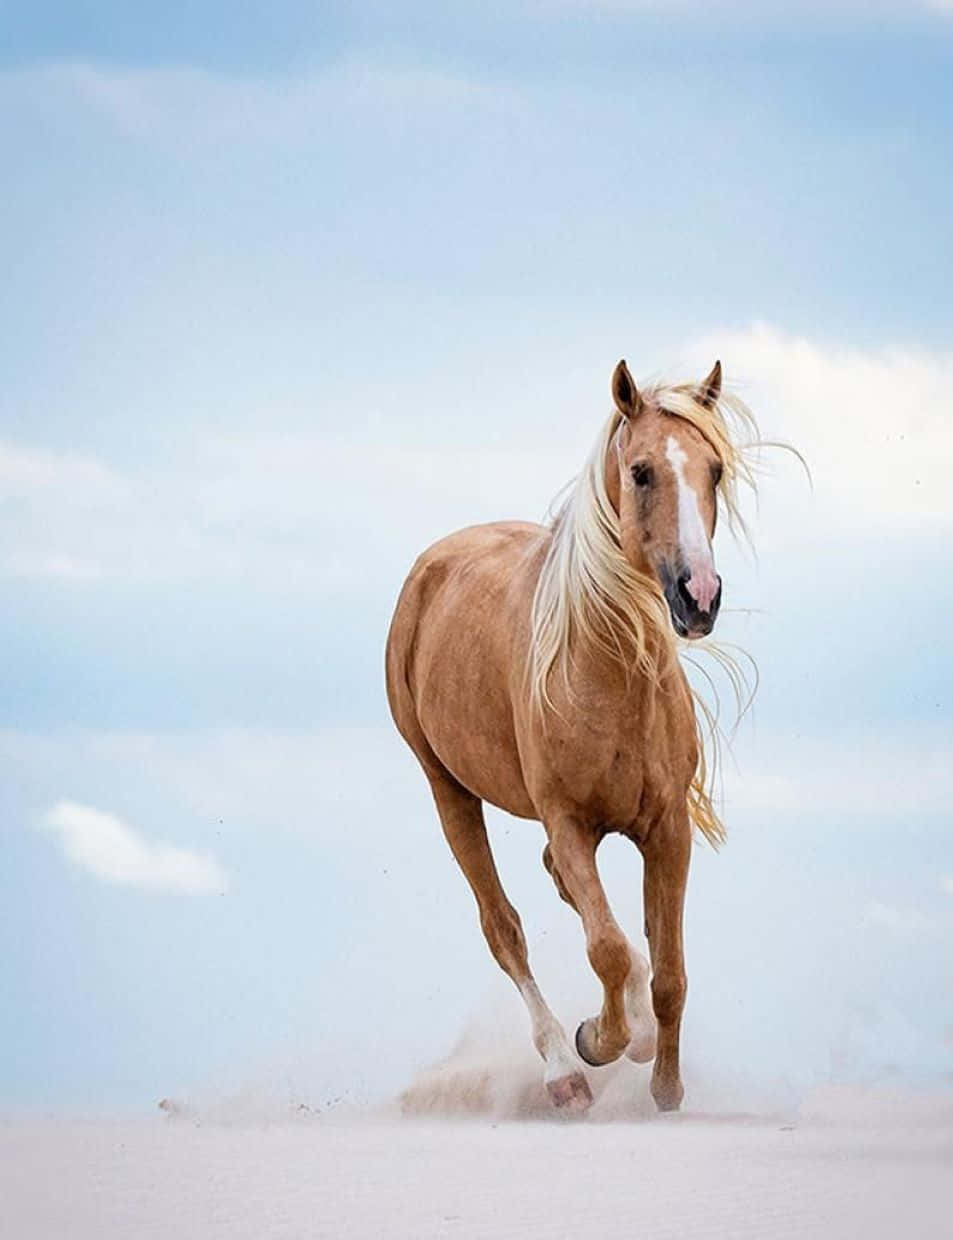 "Beautiful Palomino Horse Against a Stunning Mountain Backdrop"